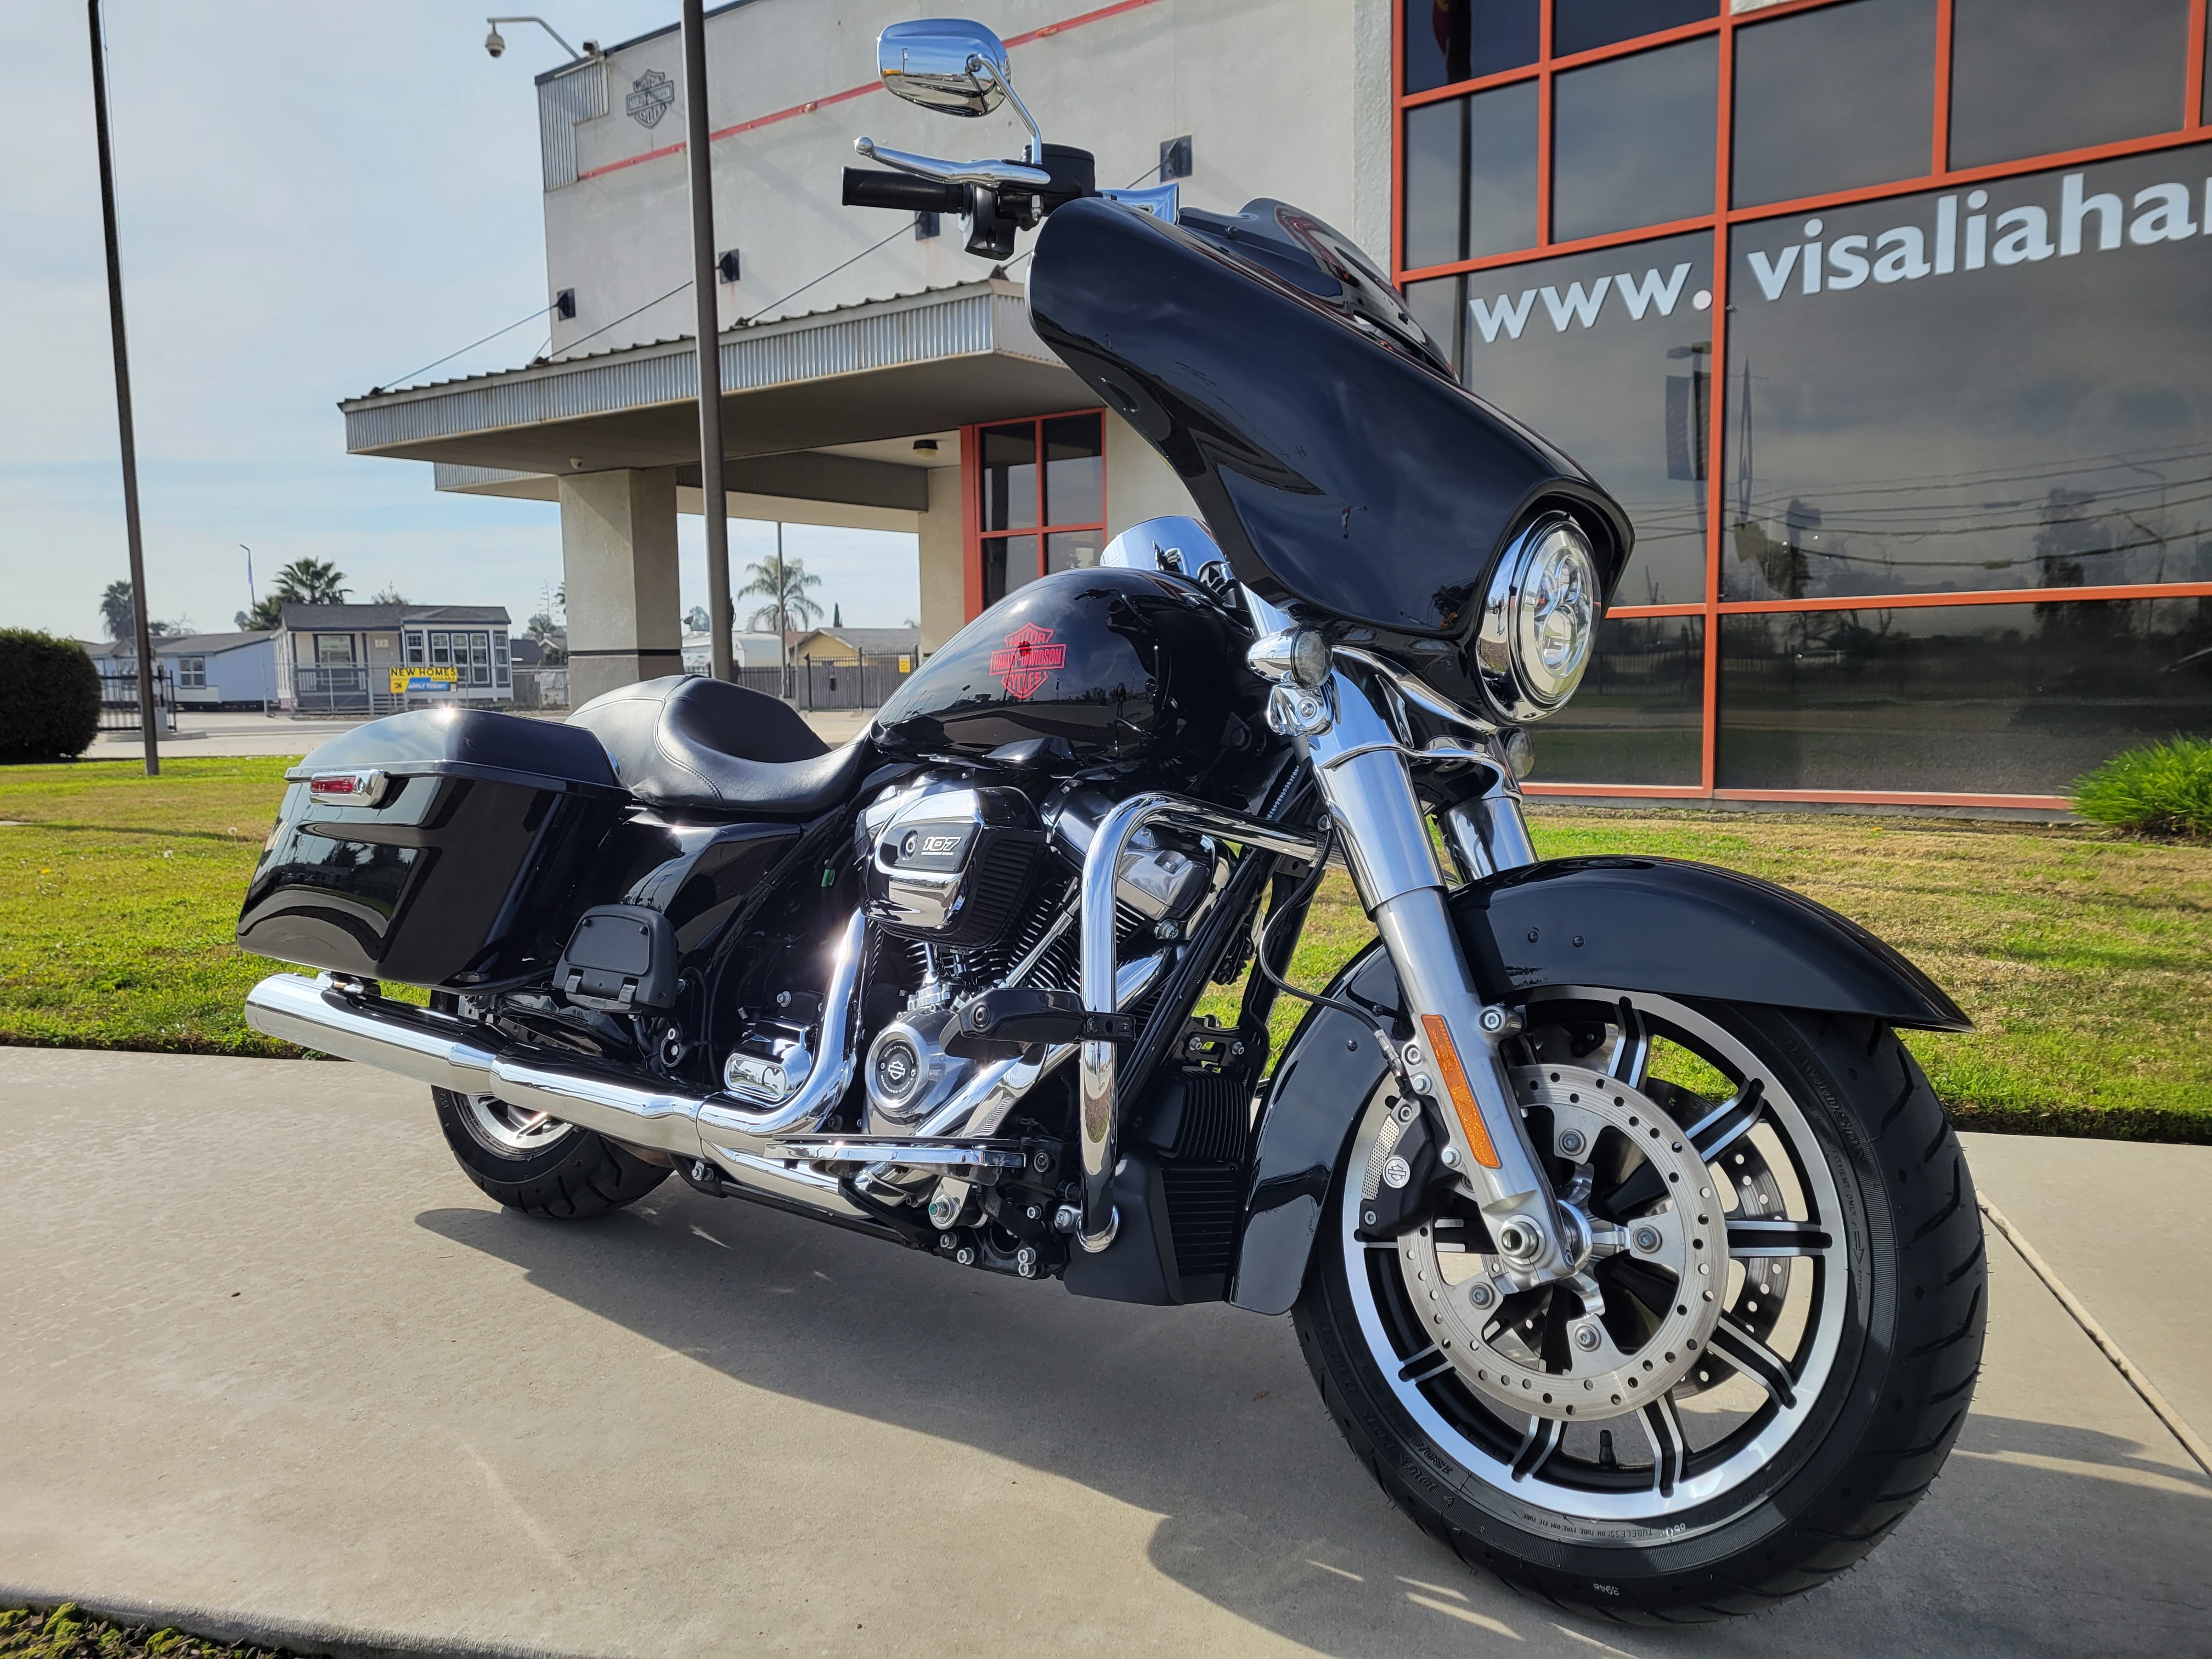 2019 Harley-Davidson Electra Glide Standard at Visalia Harley-Davidson